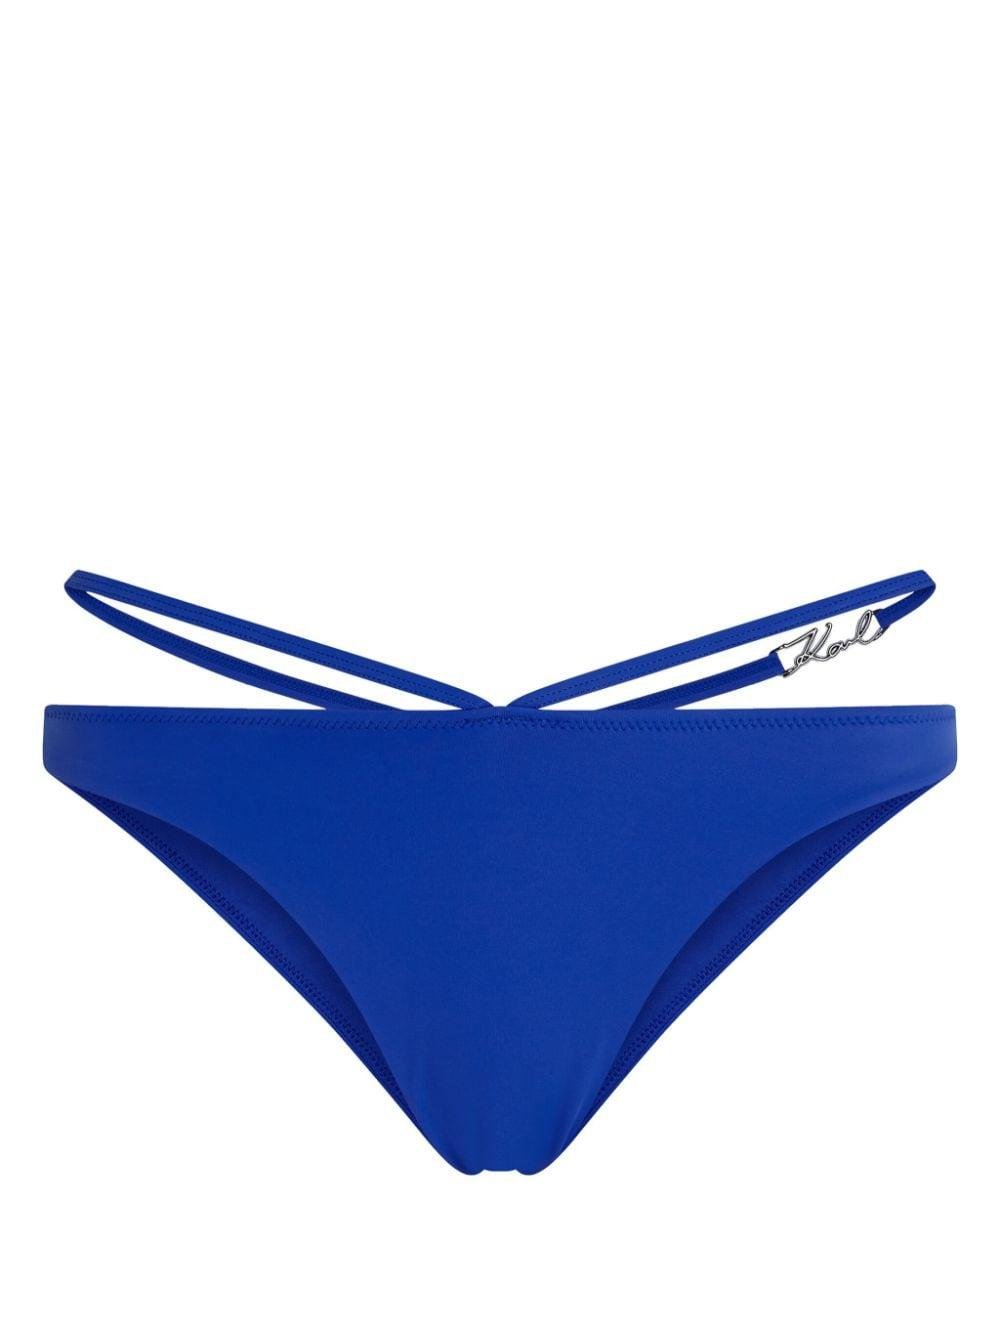 Karl Lagerfeld Ikonik 2.0 Lurex String Bikini Bottoms - Farfetch